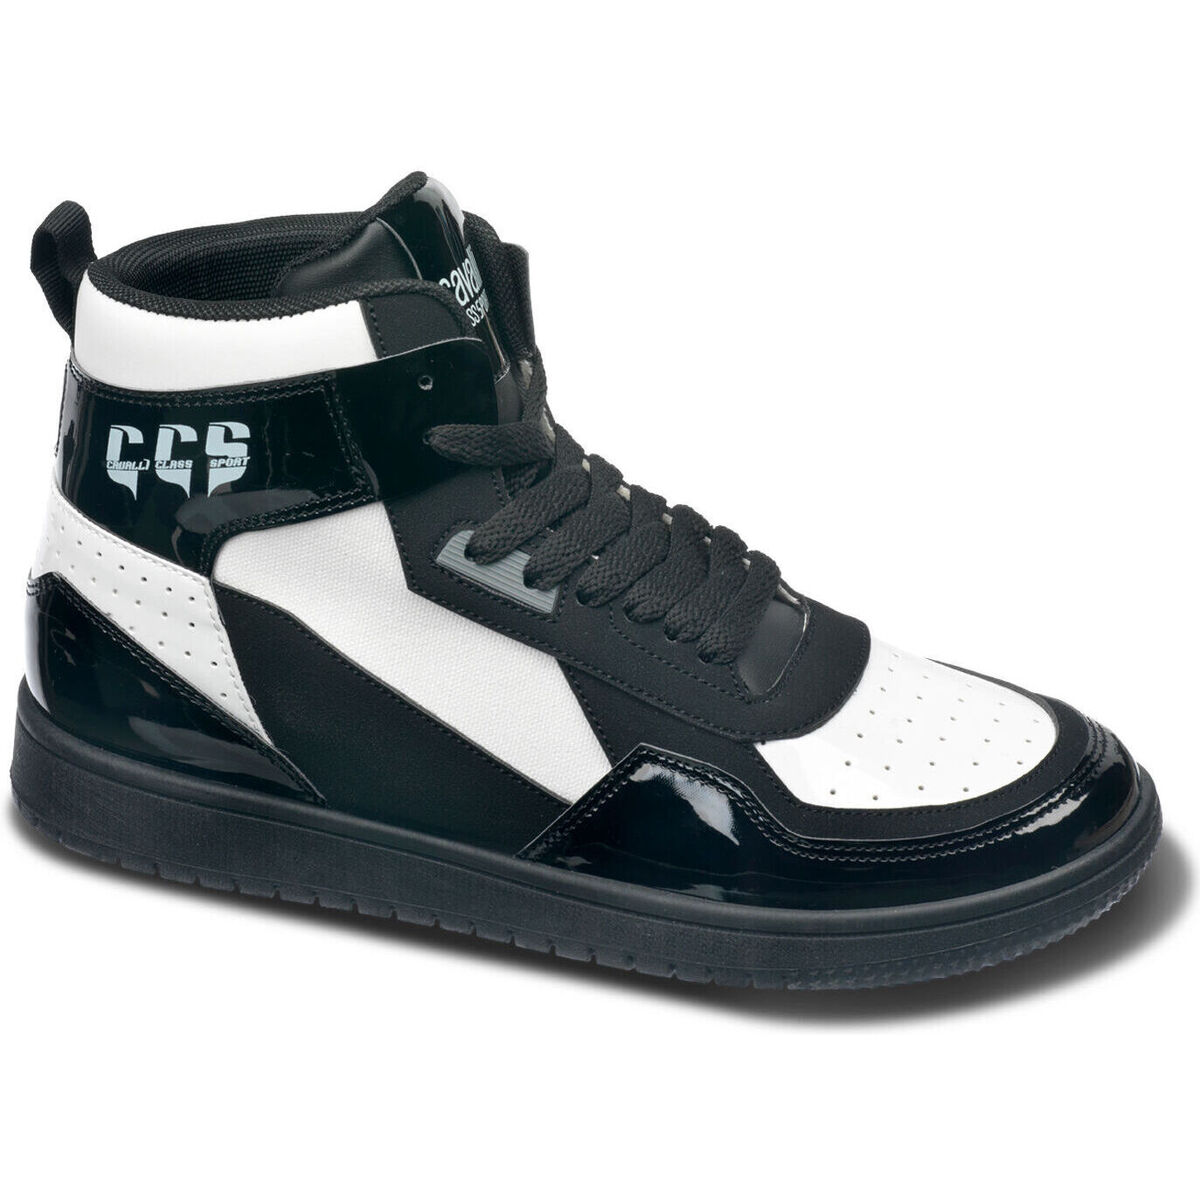 Sneakers Roberto Cavalli - CM8804 Black